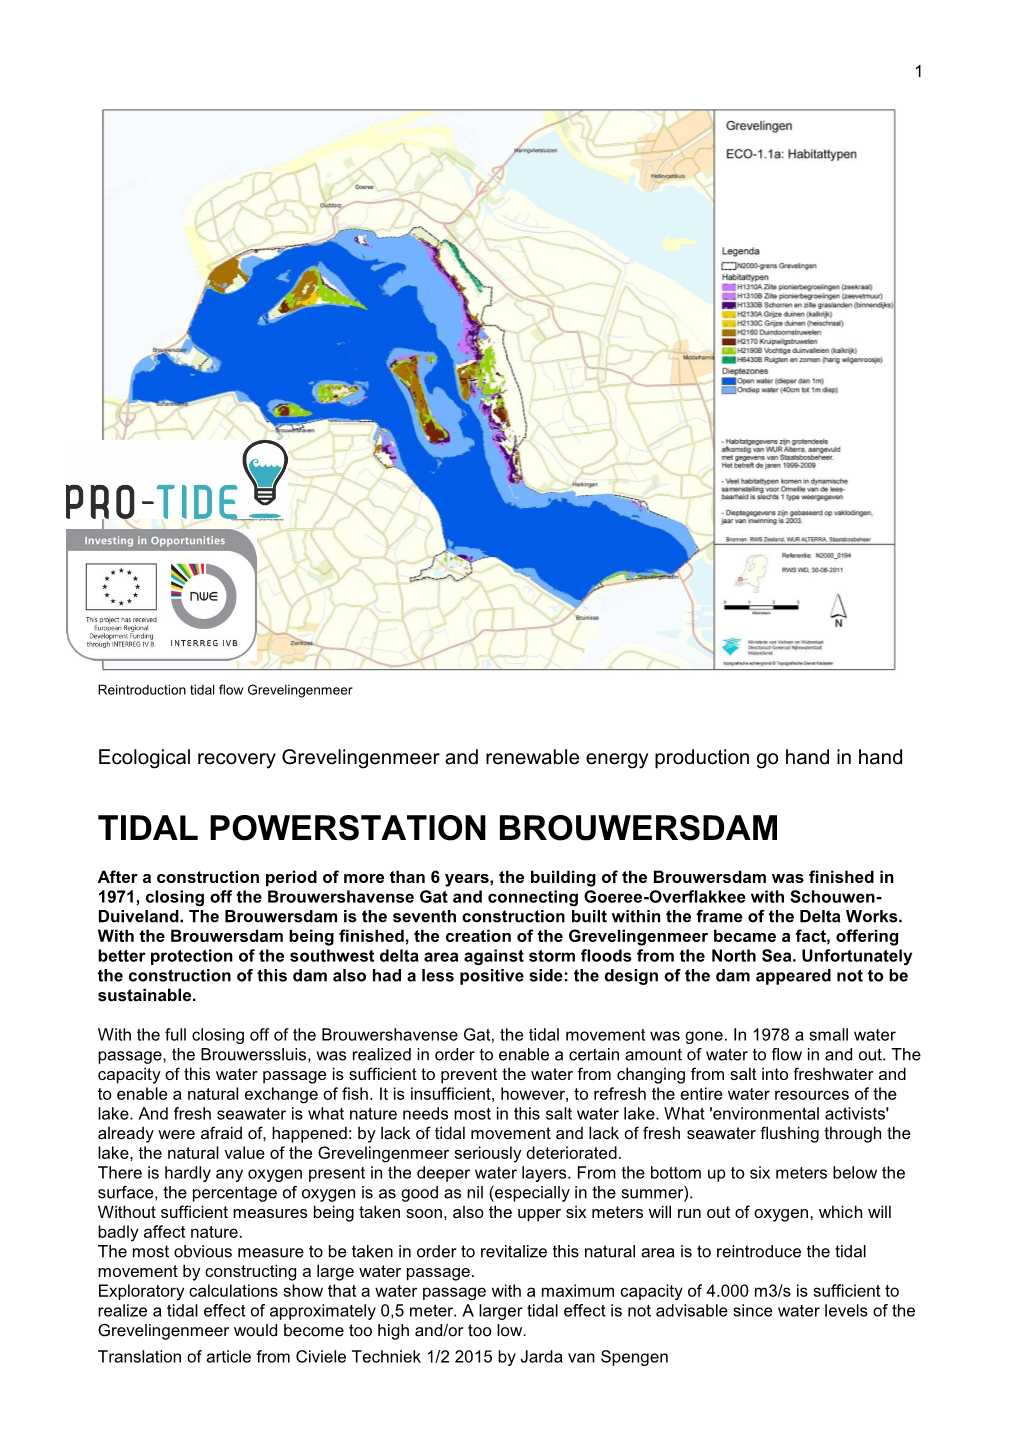 Tidal Powerstation Brouwersdam